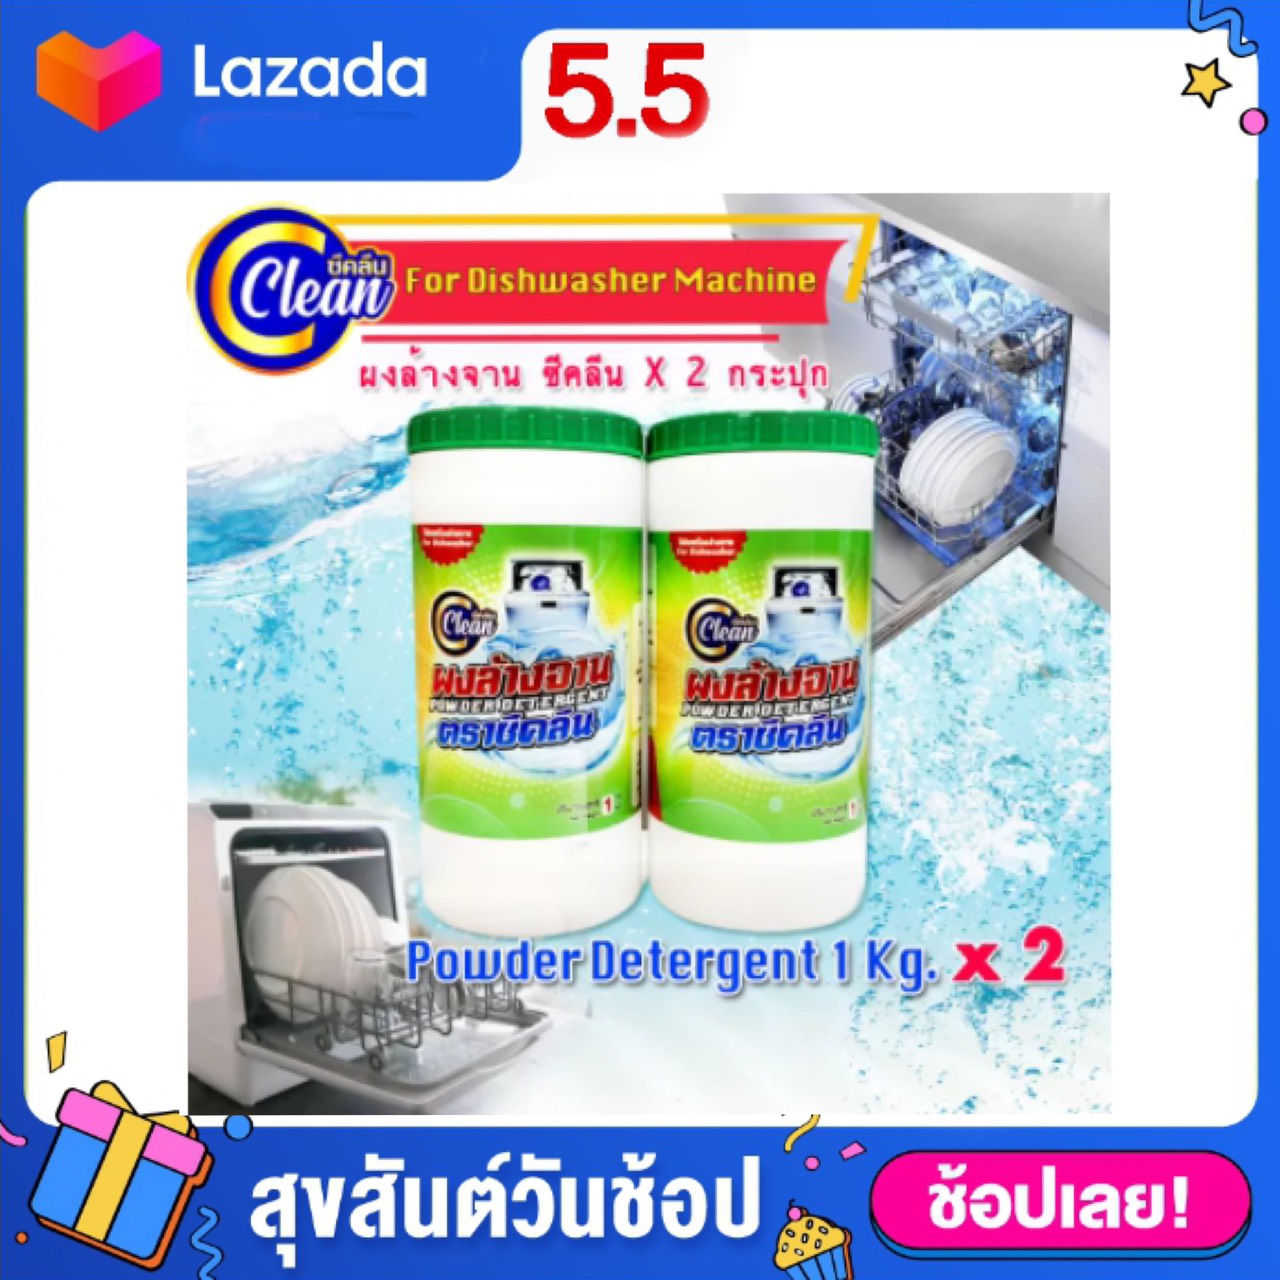 C-Clean Dishwasher Detergent 1Kg. x 2 ซีคลีน ผงล้างจาน  สำหรับเครื่องล้างจานอัตโนมัติ